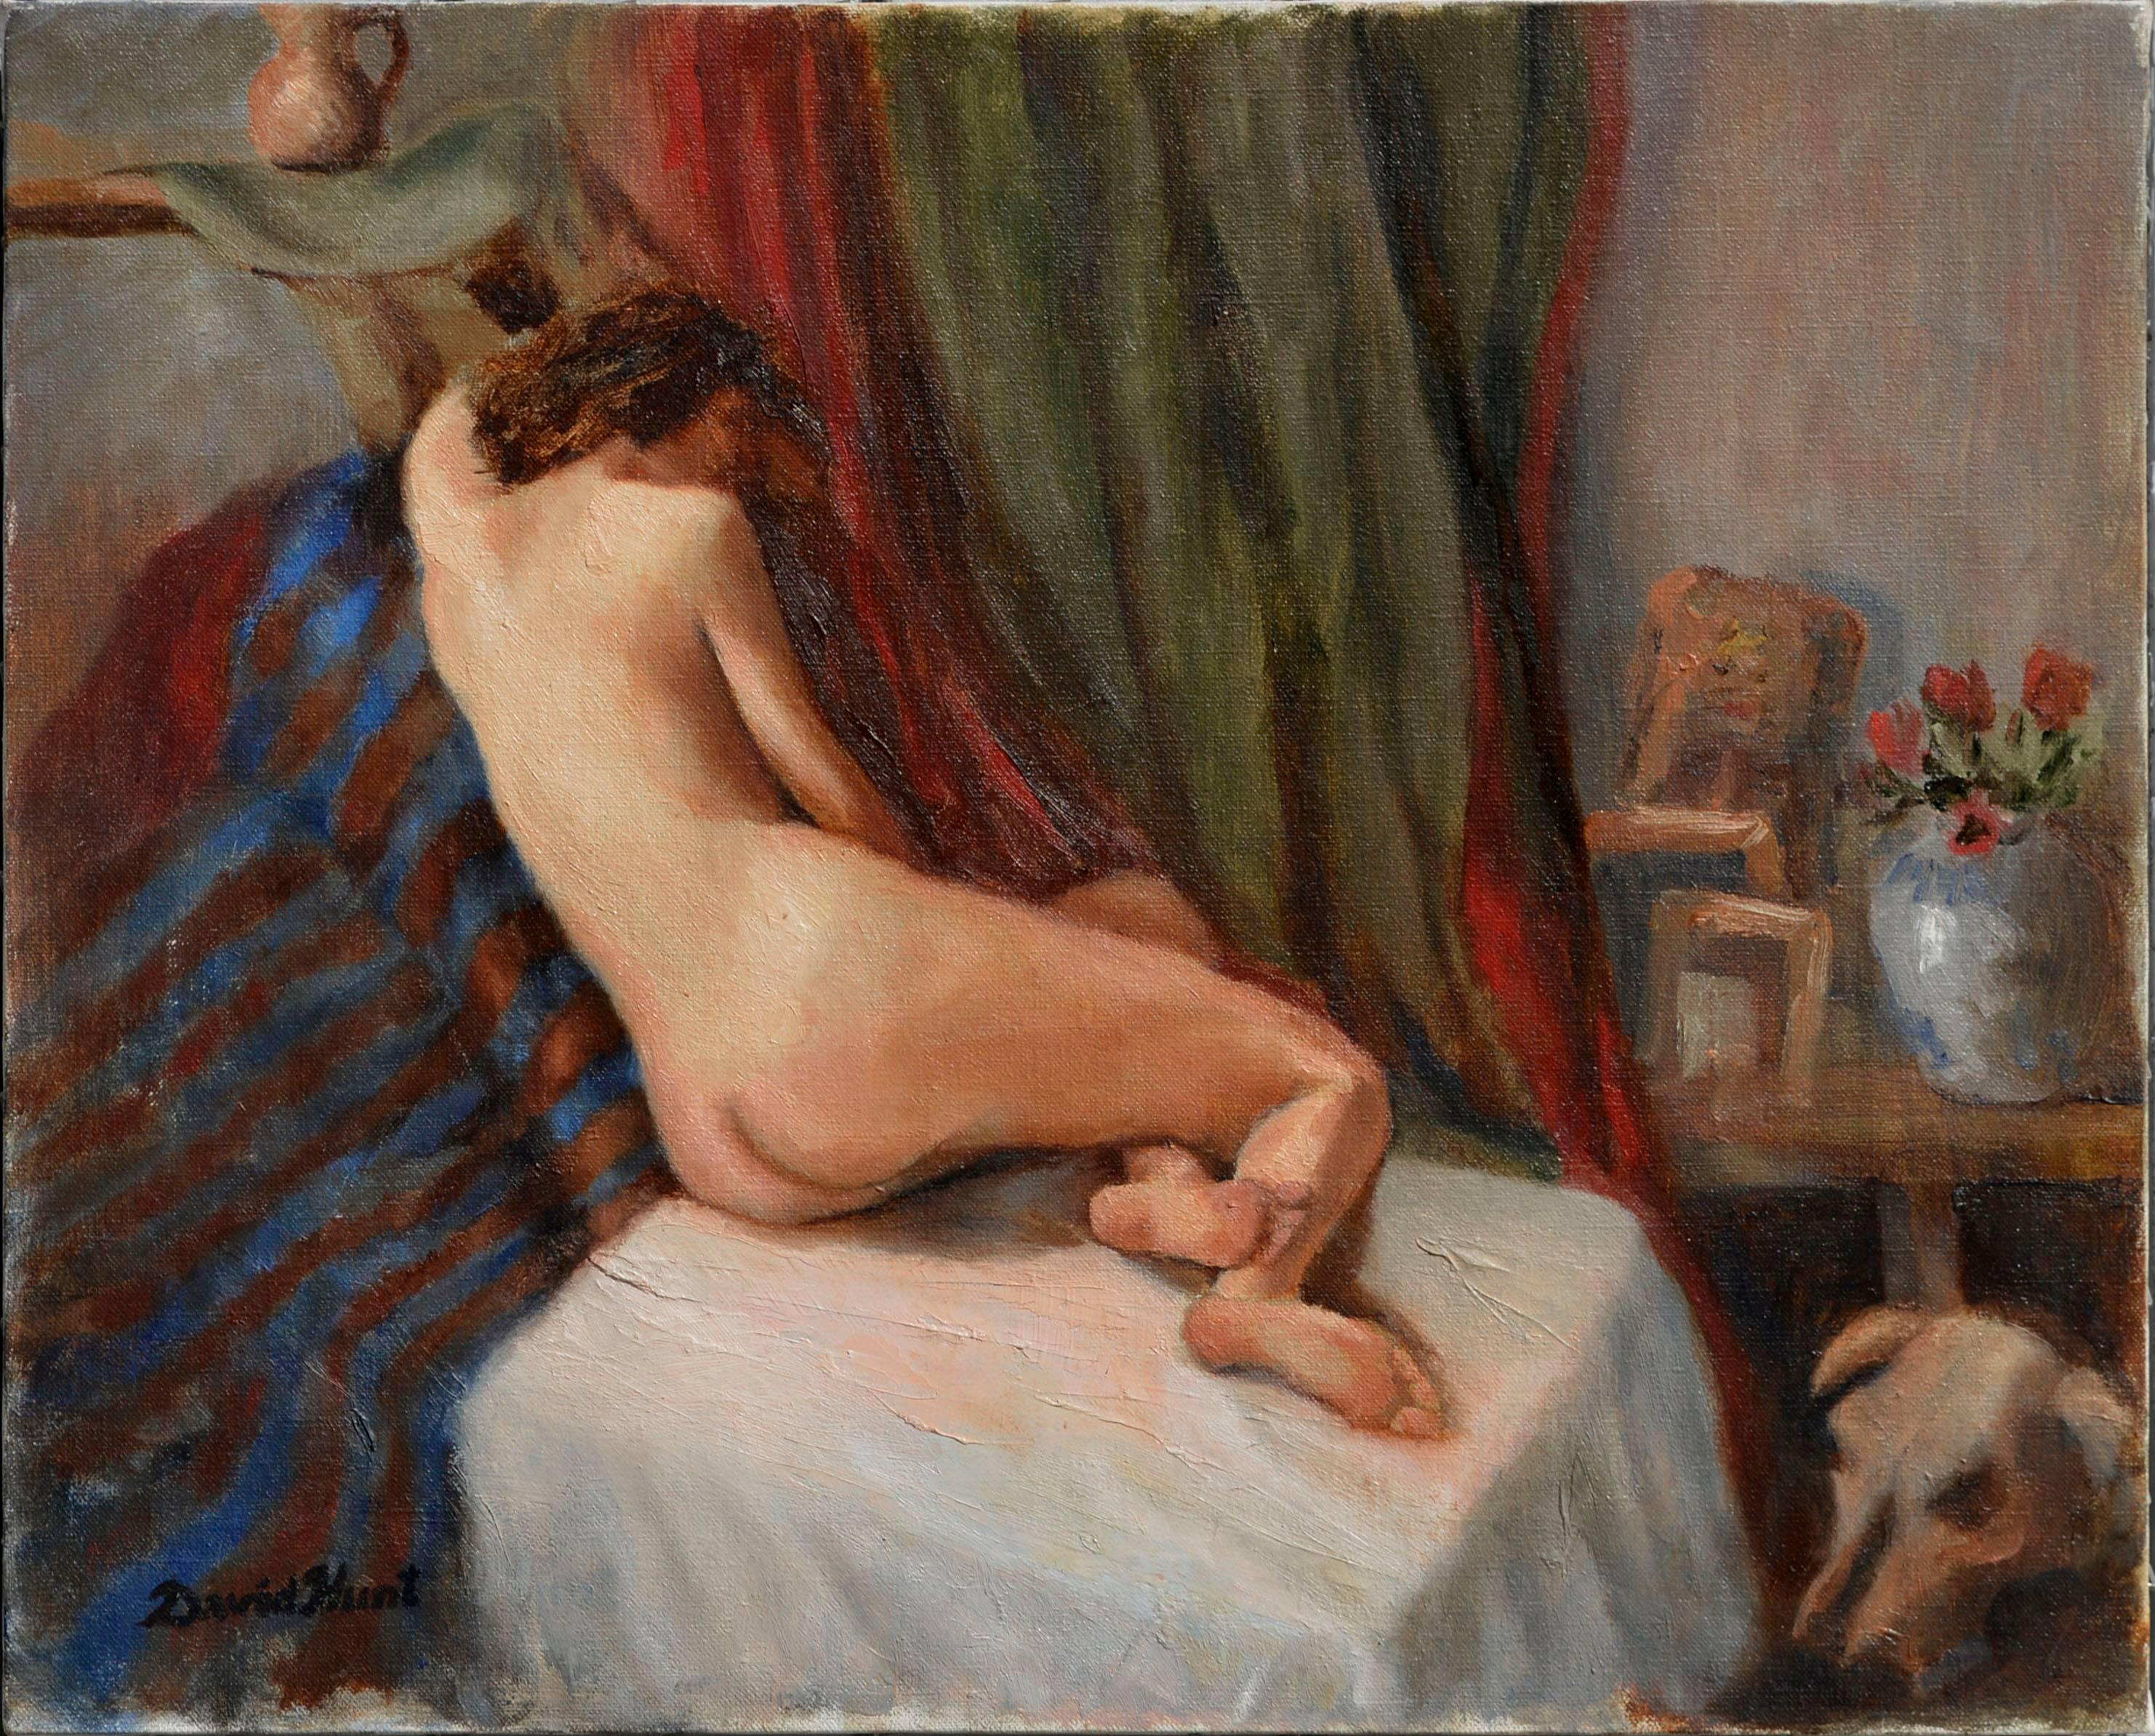 David Hunt Nude Painting – Liegende nackte Figur 